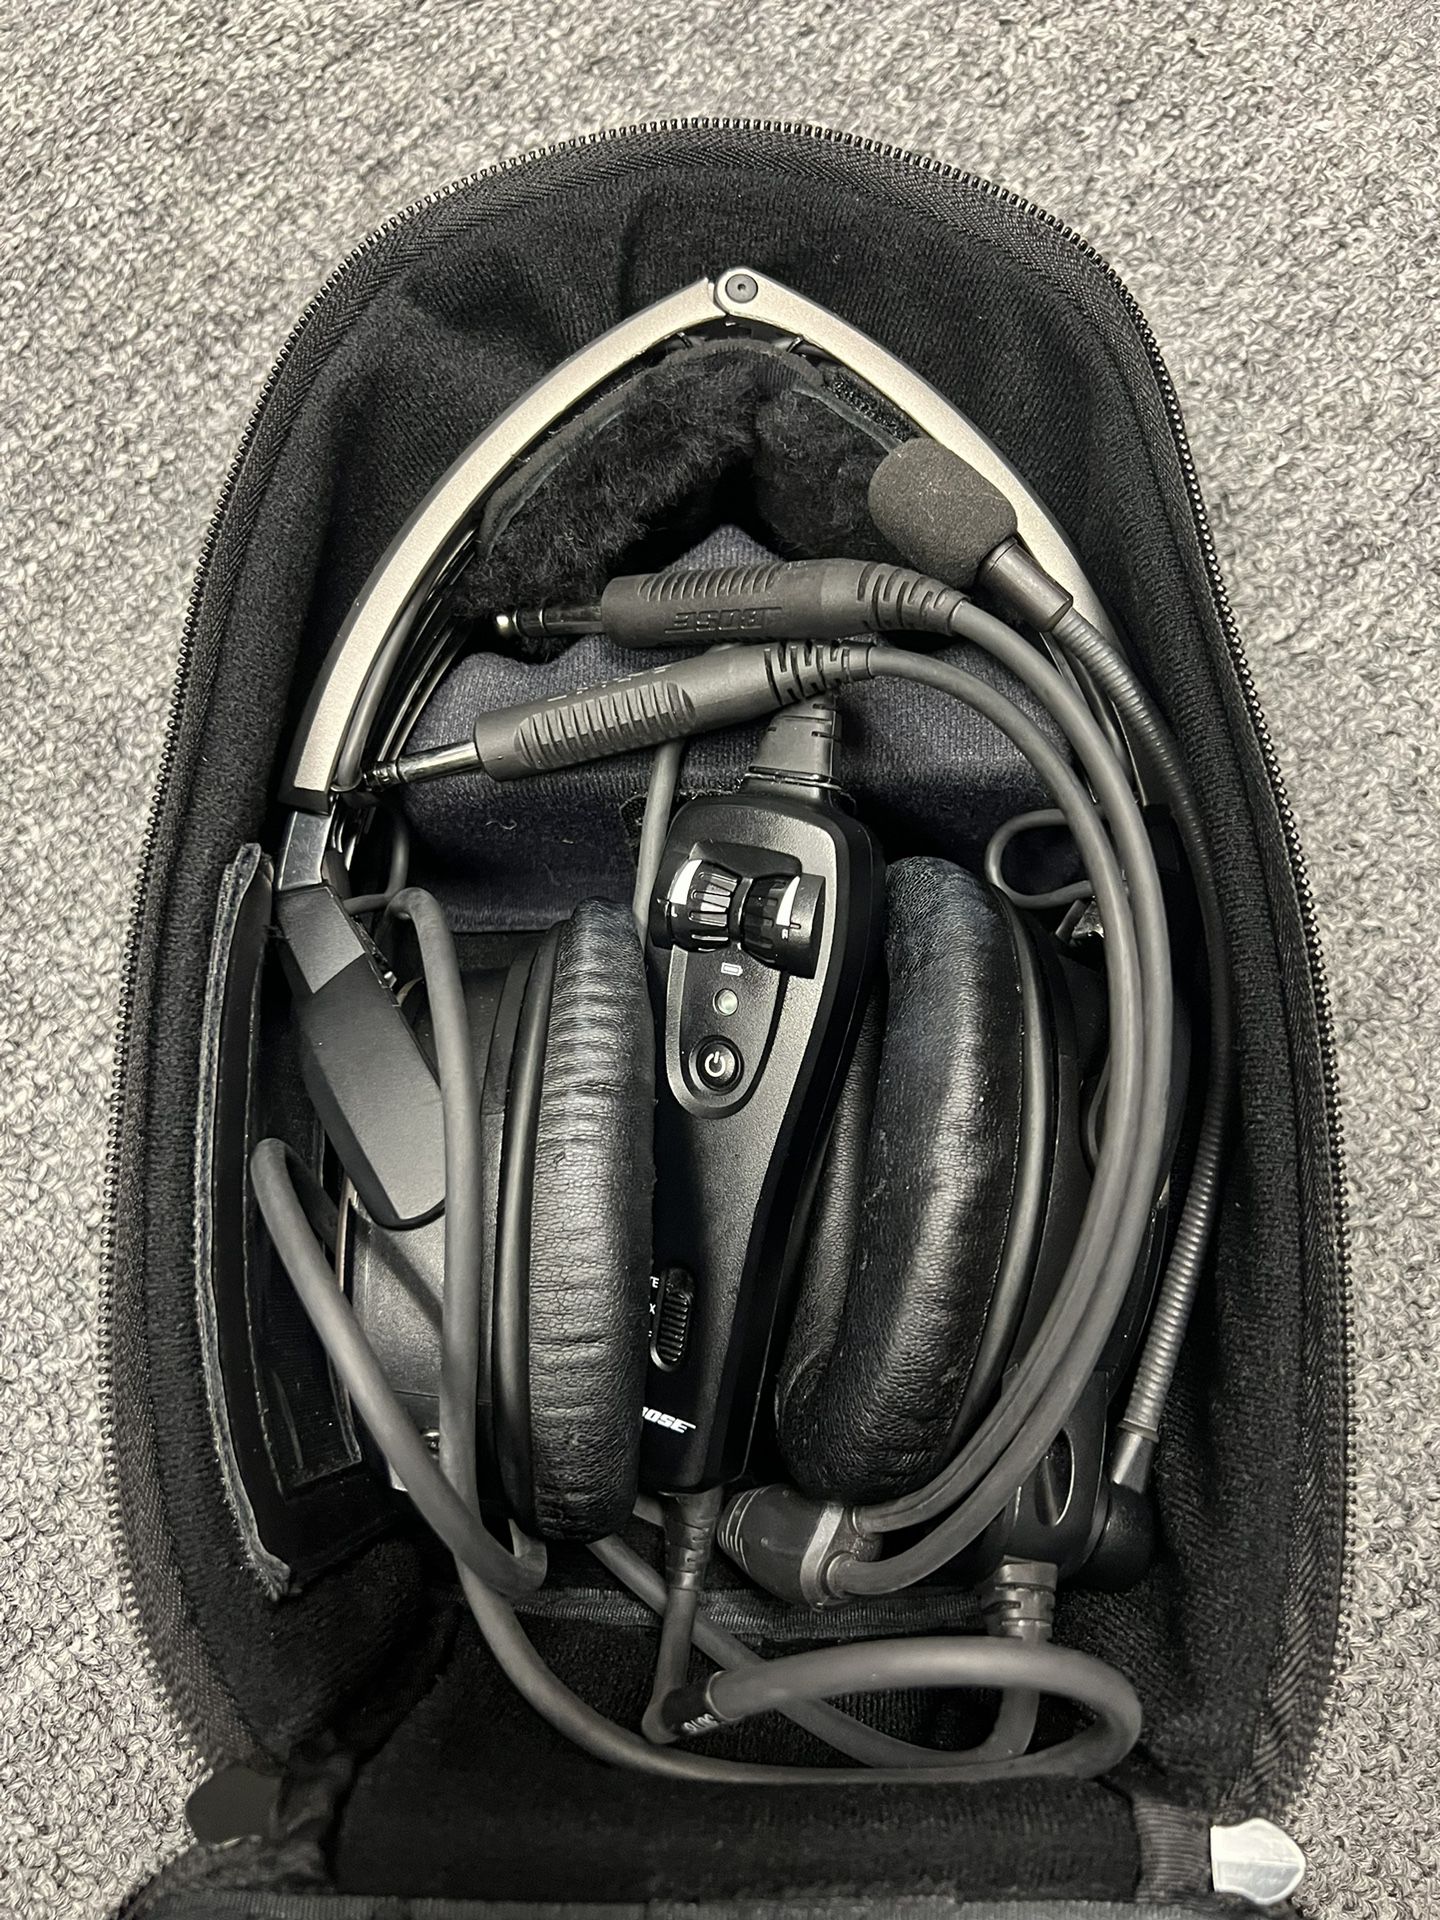 Bose A20 Aviation Headphones 